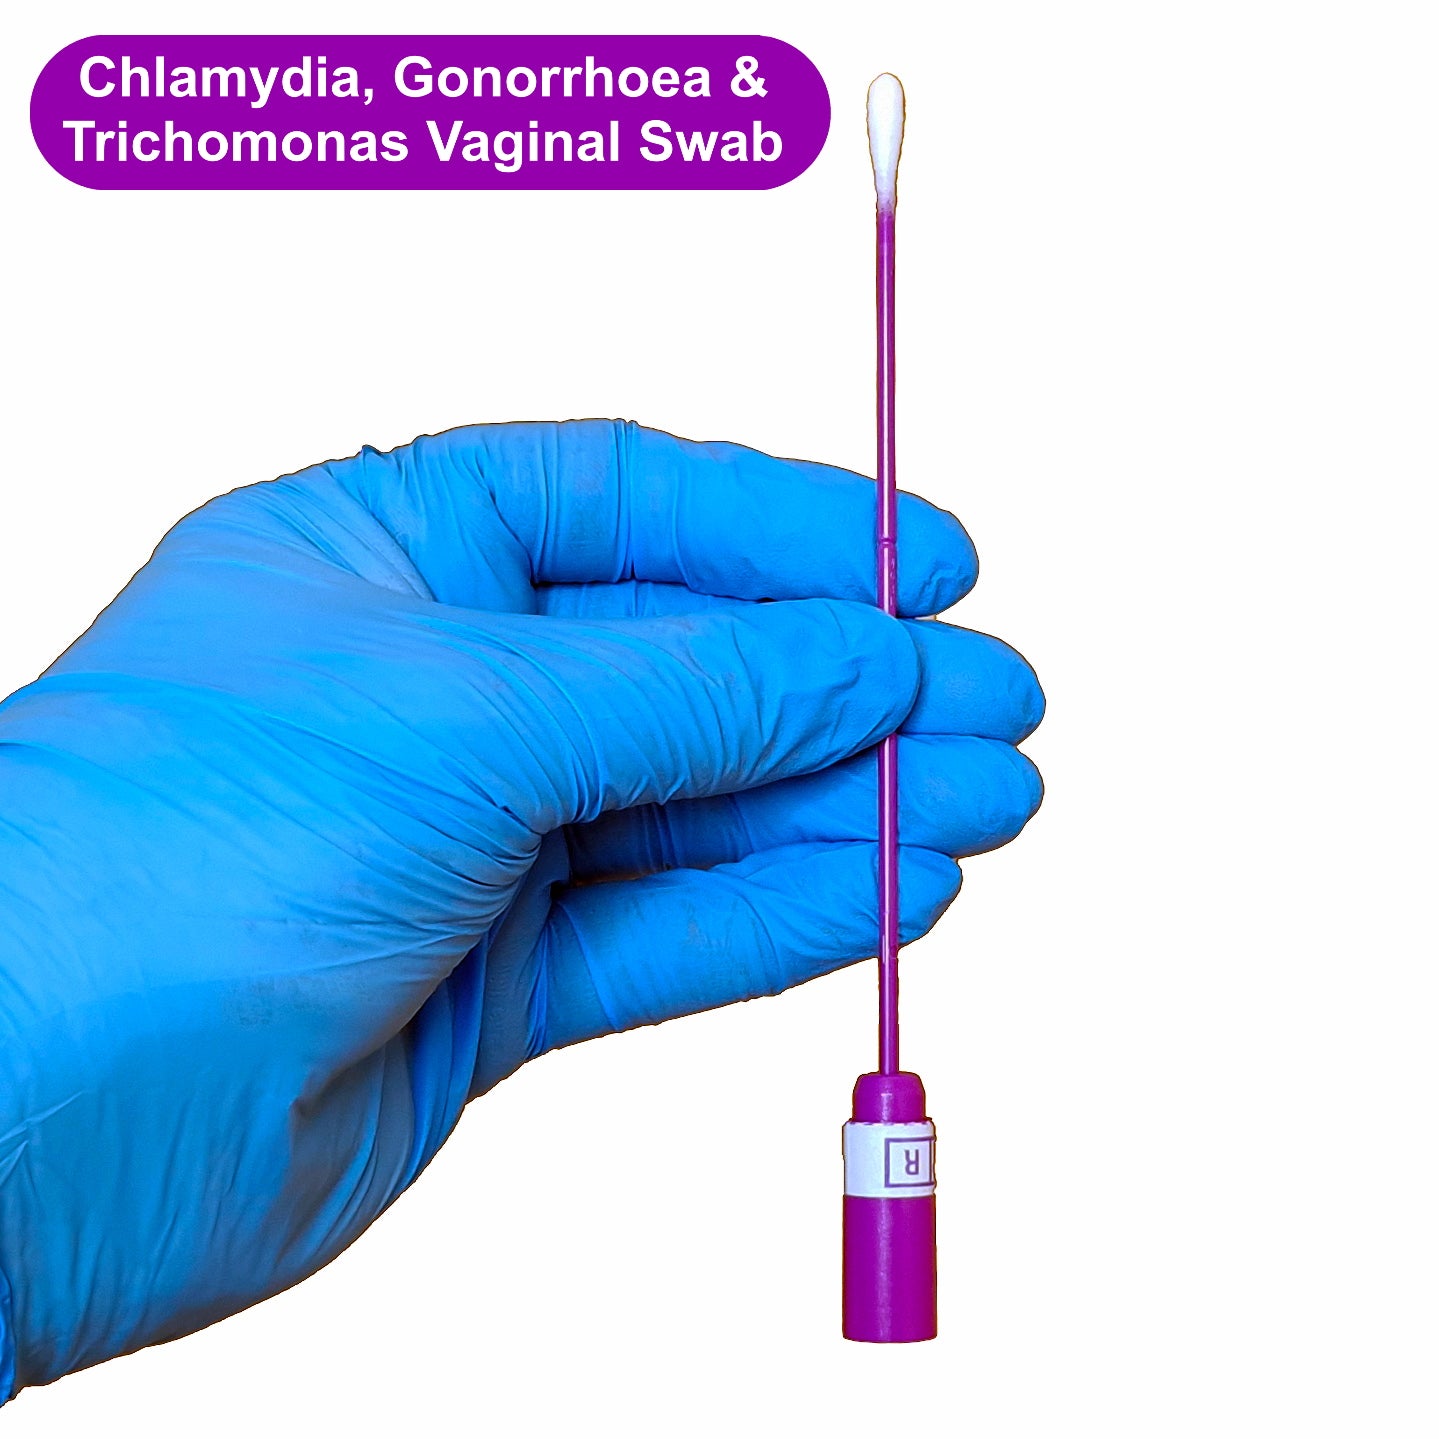 Chlamydia, Gonorrhoea & Trichomonas Vaginal Swab